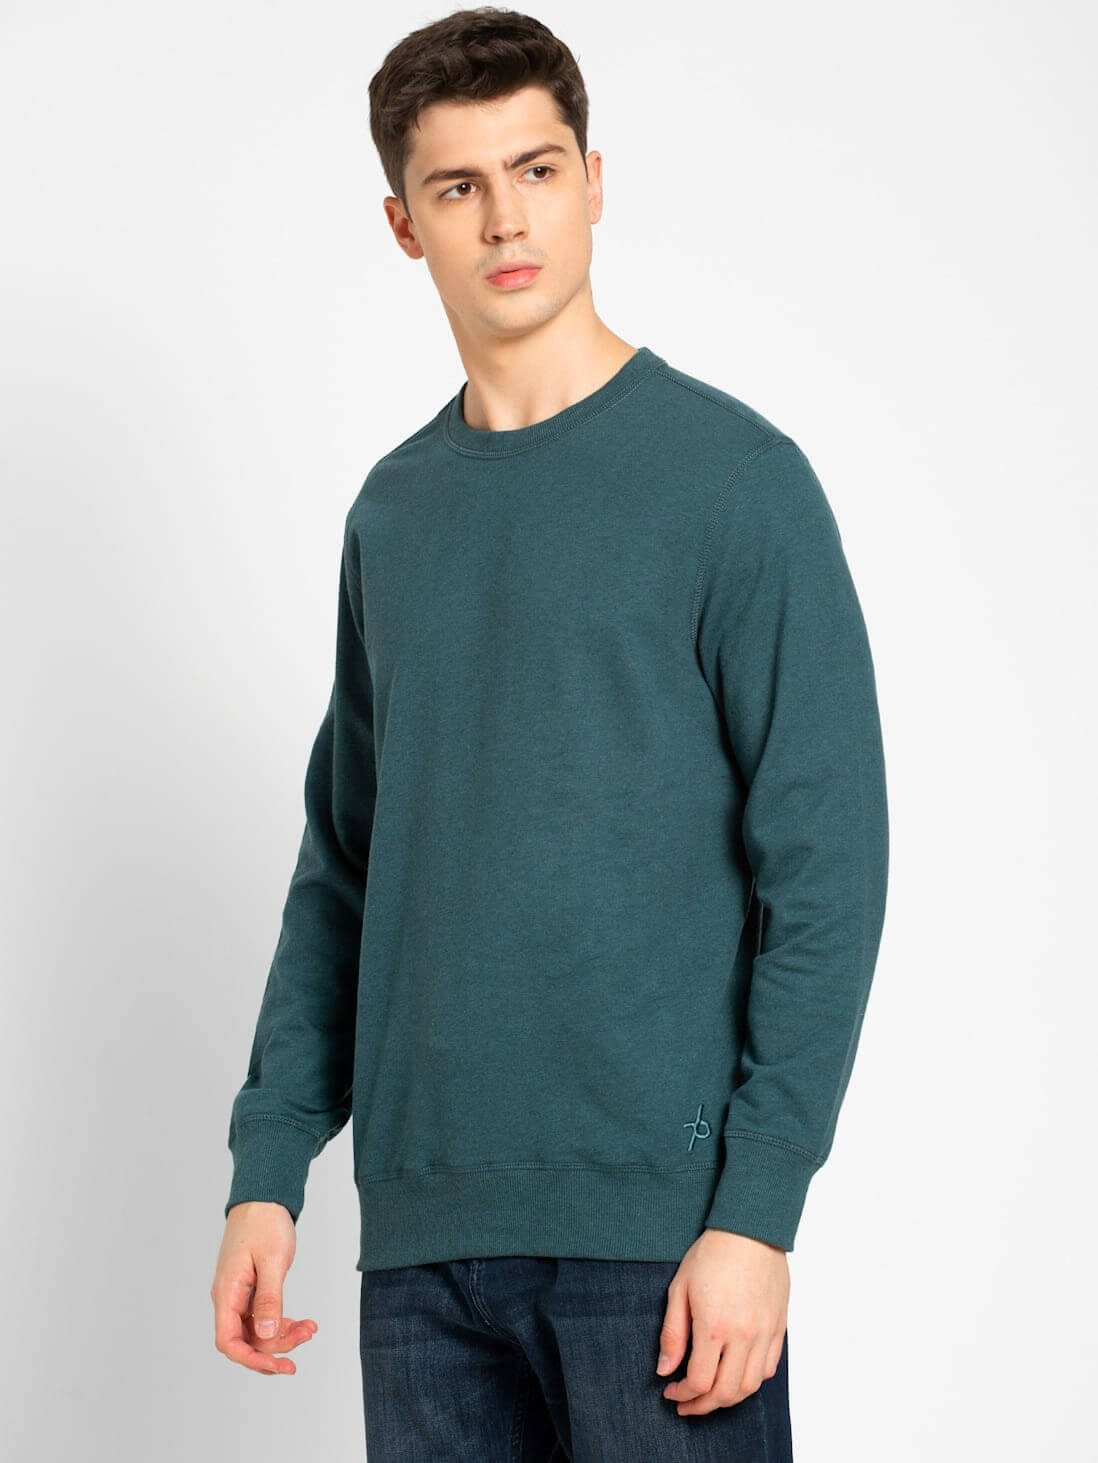 Jockey Pine French Terry Sweatshirt for Men #2716